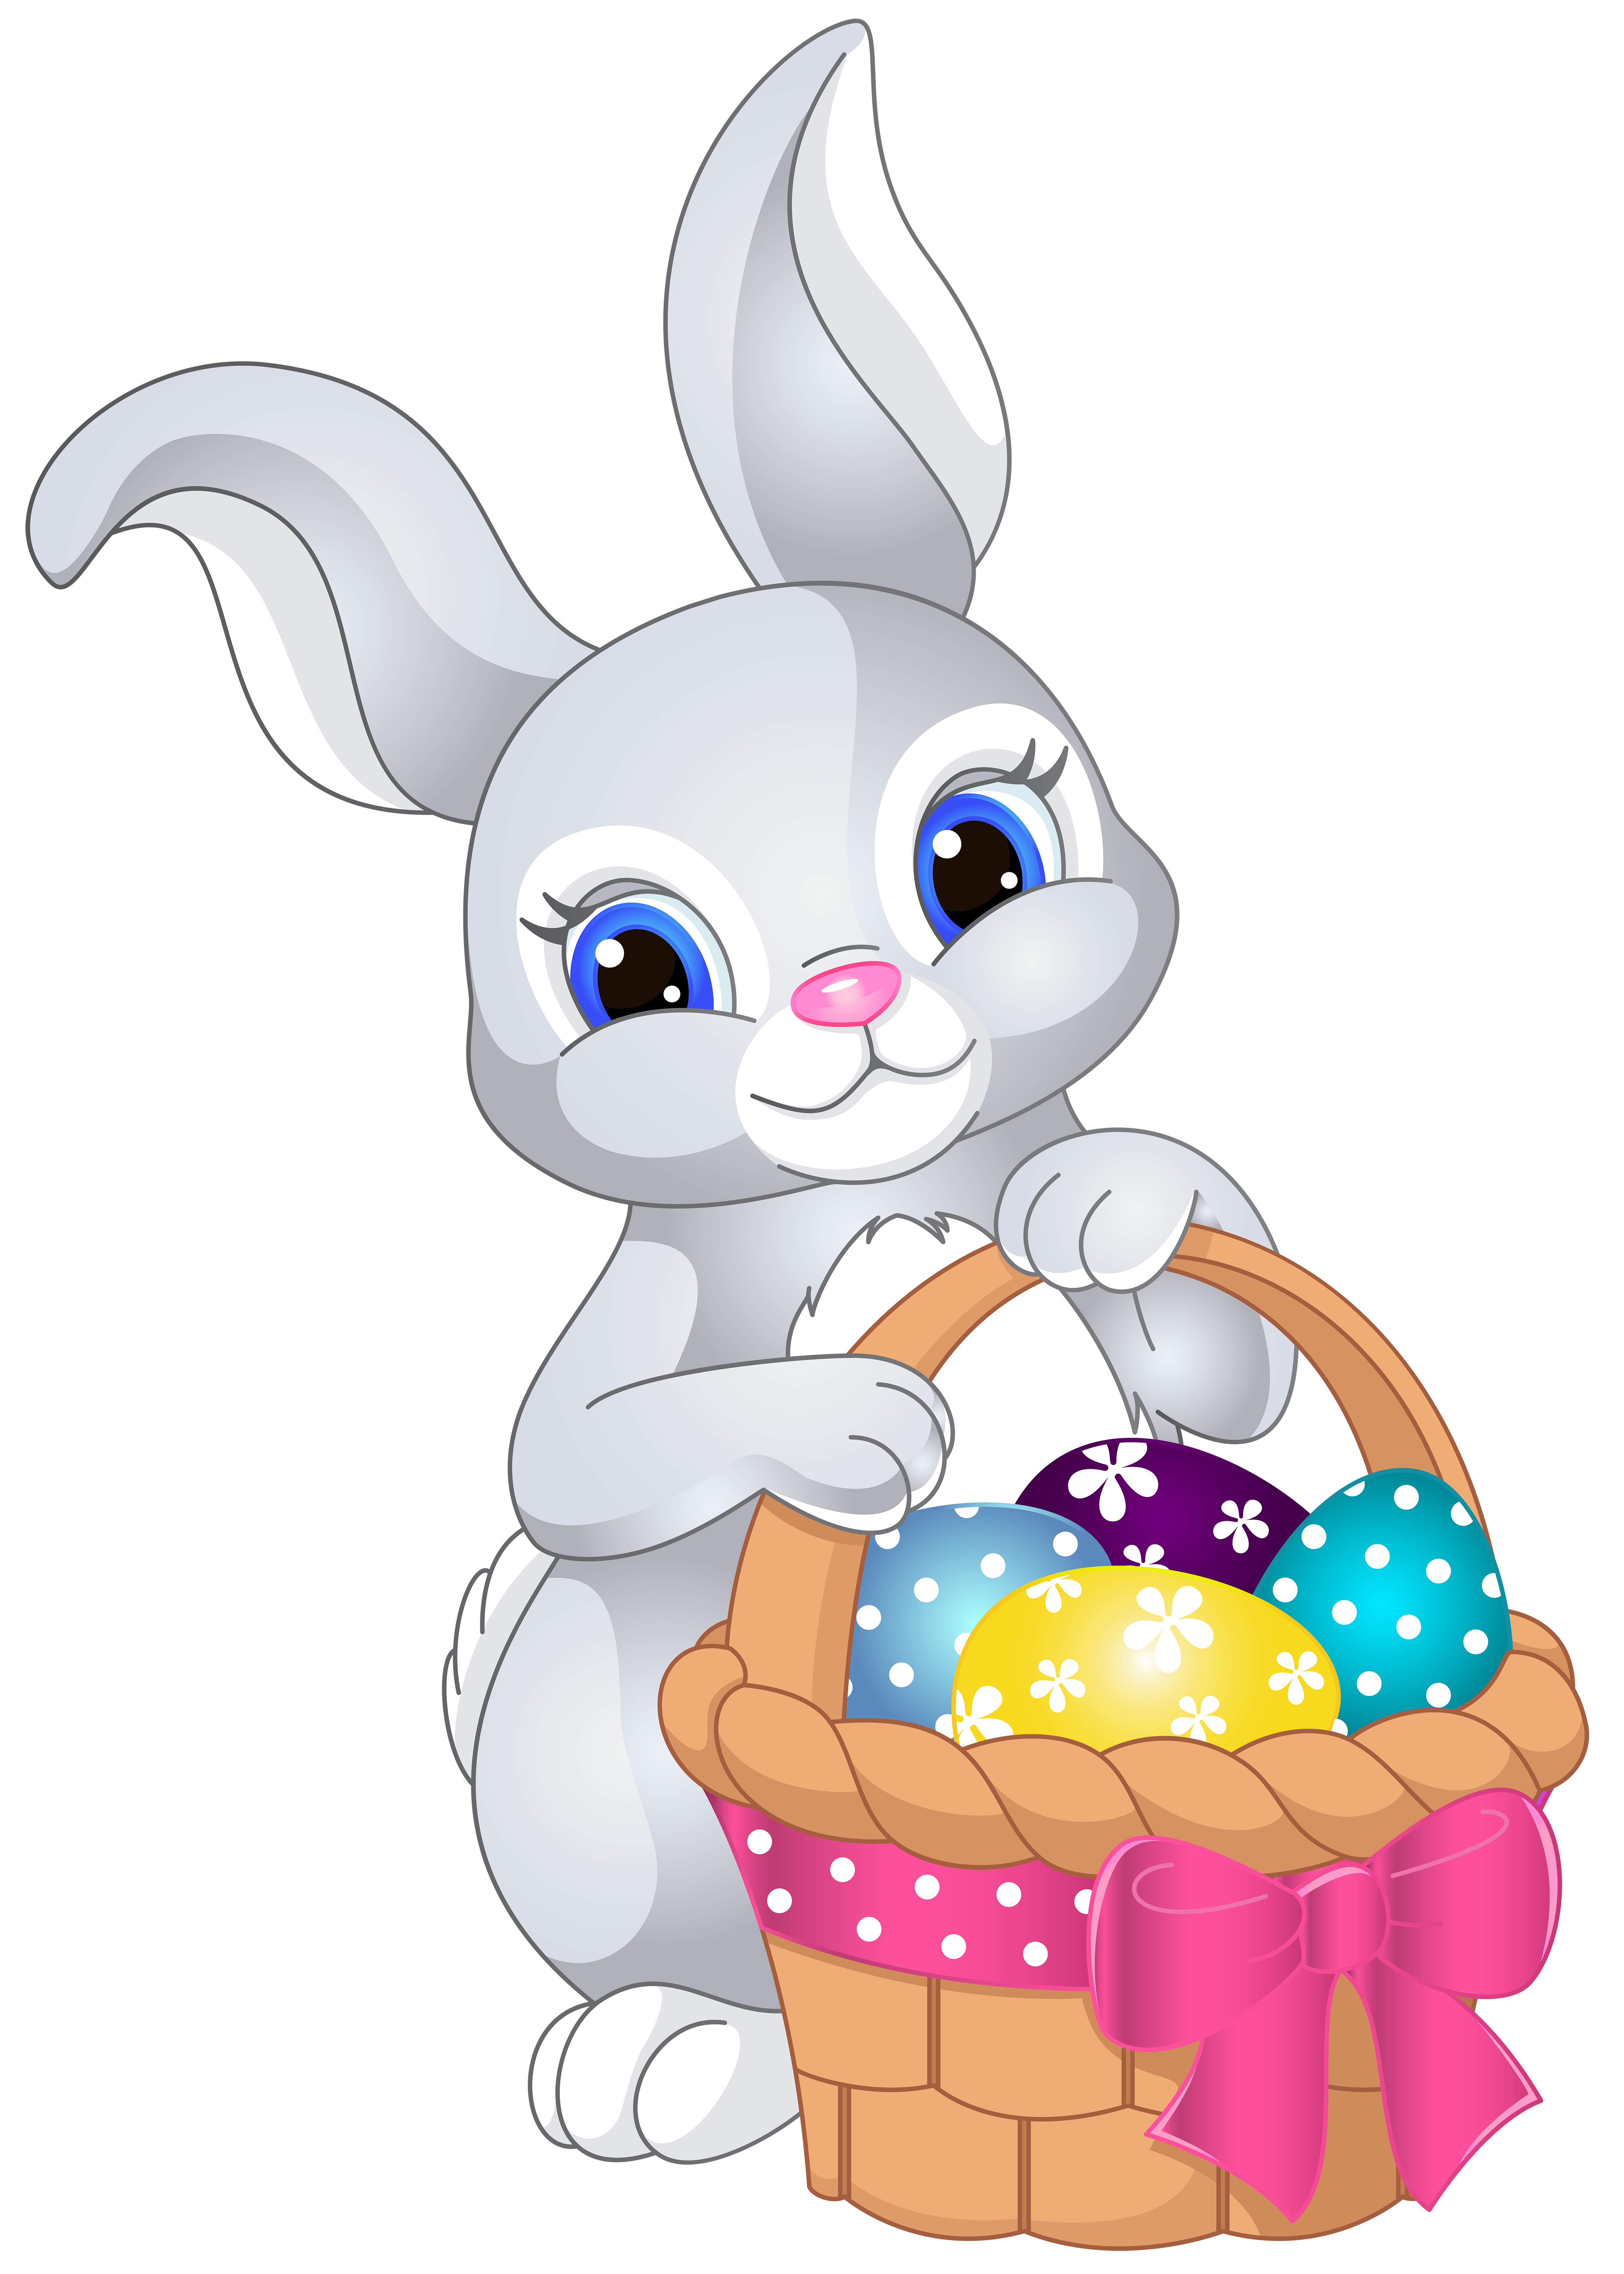 Easter Bunny with Egg Basket PNG Clip Art Image